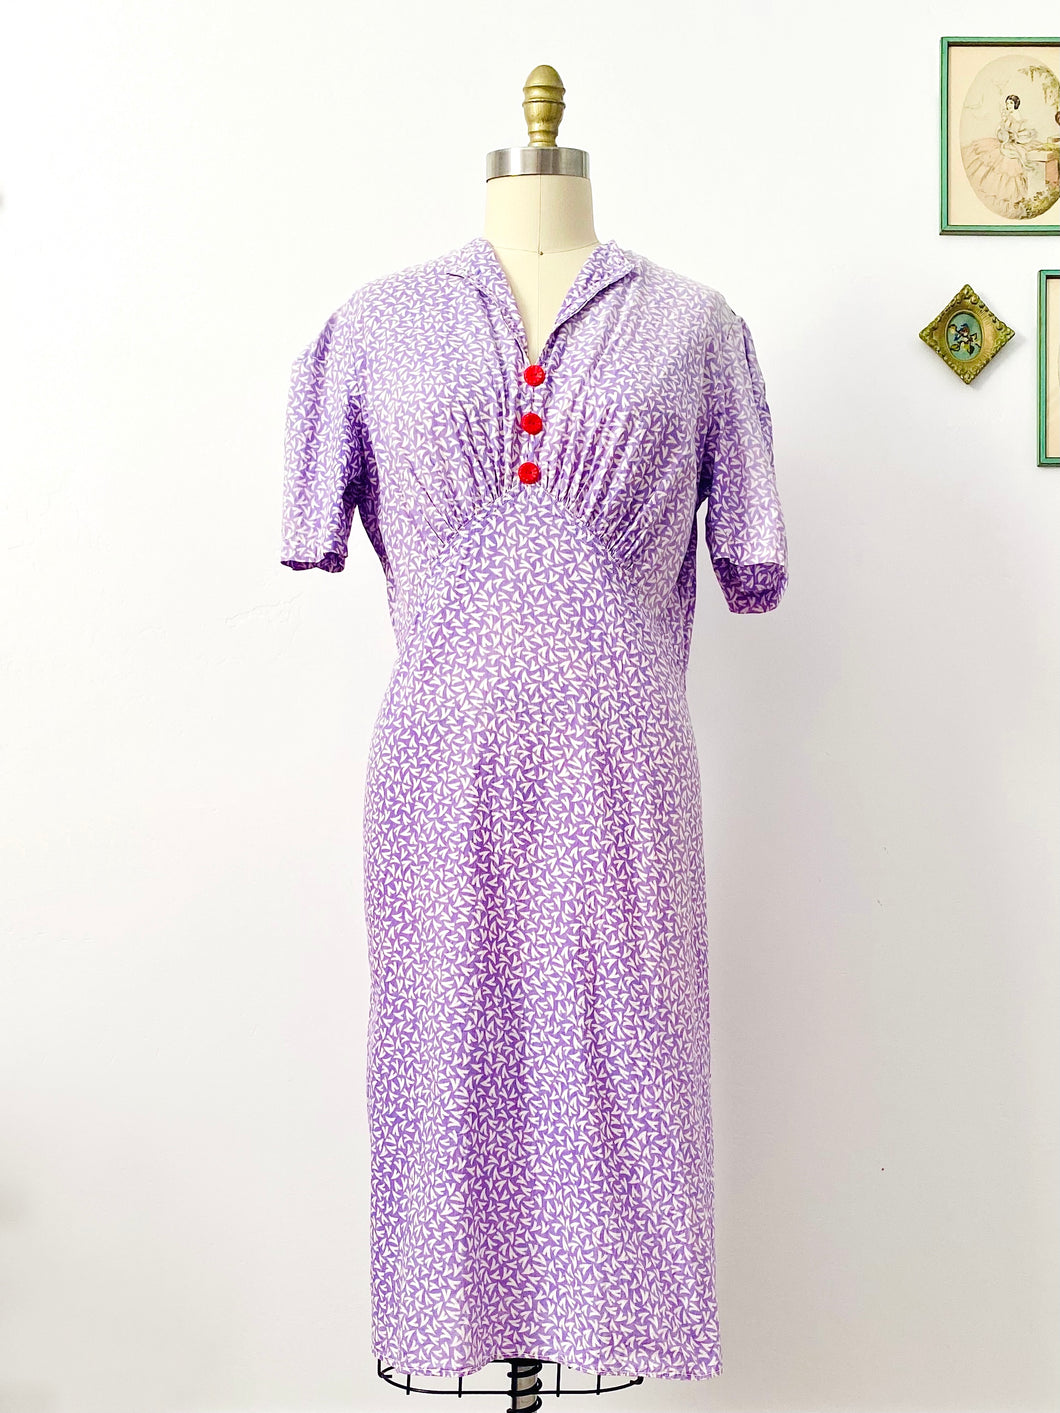 Vintage 1940s purple cotton novelty print